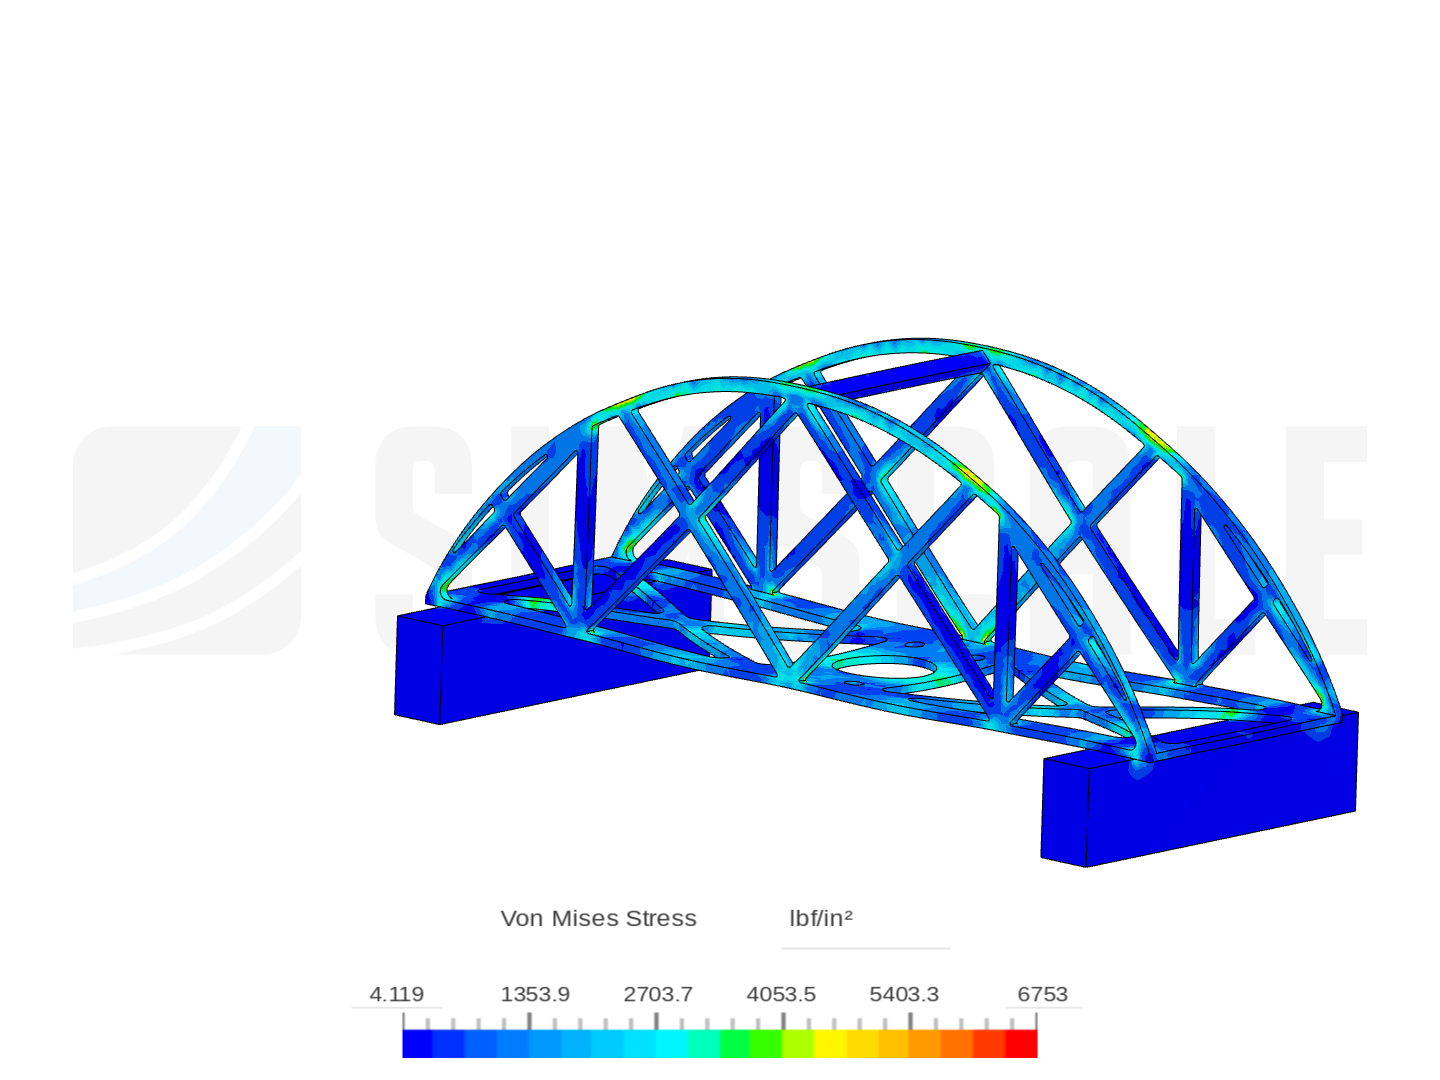 Jackson's Bridge image